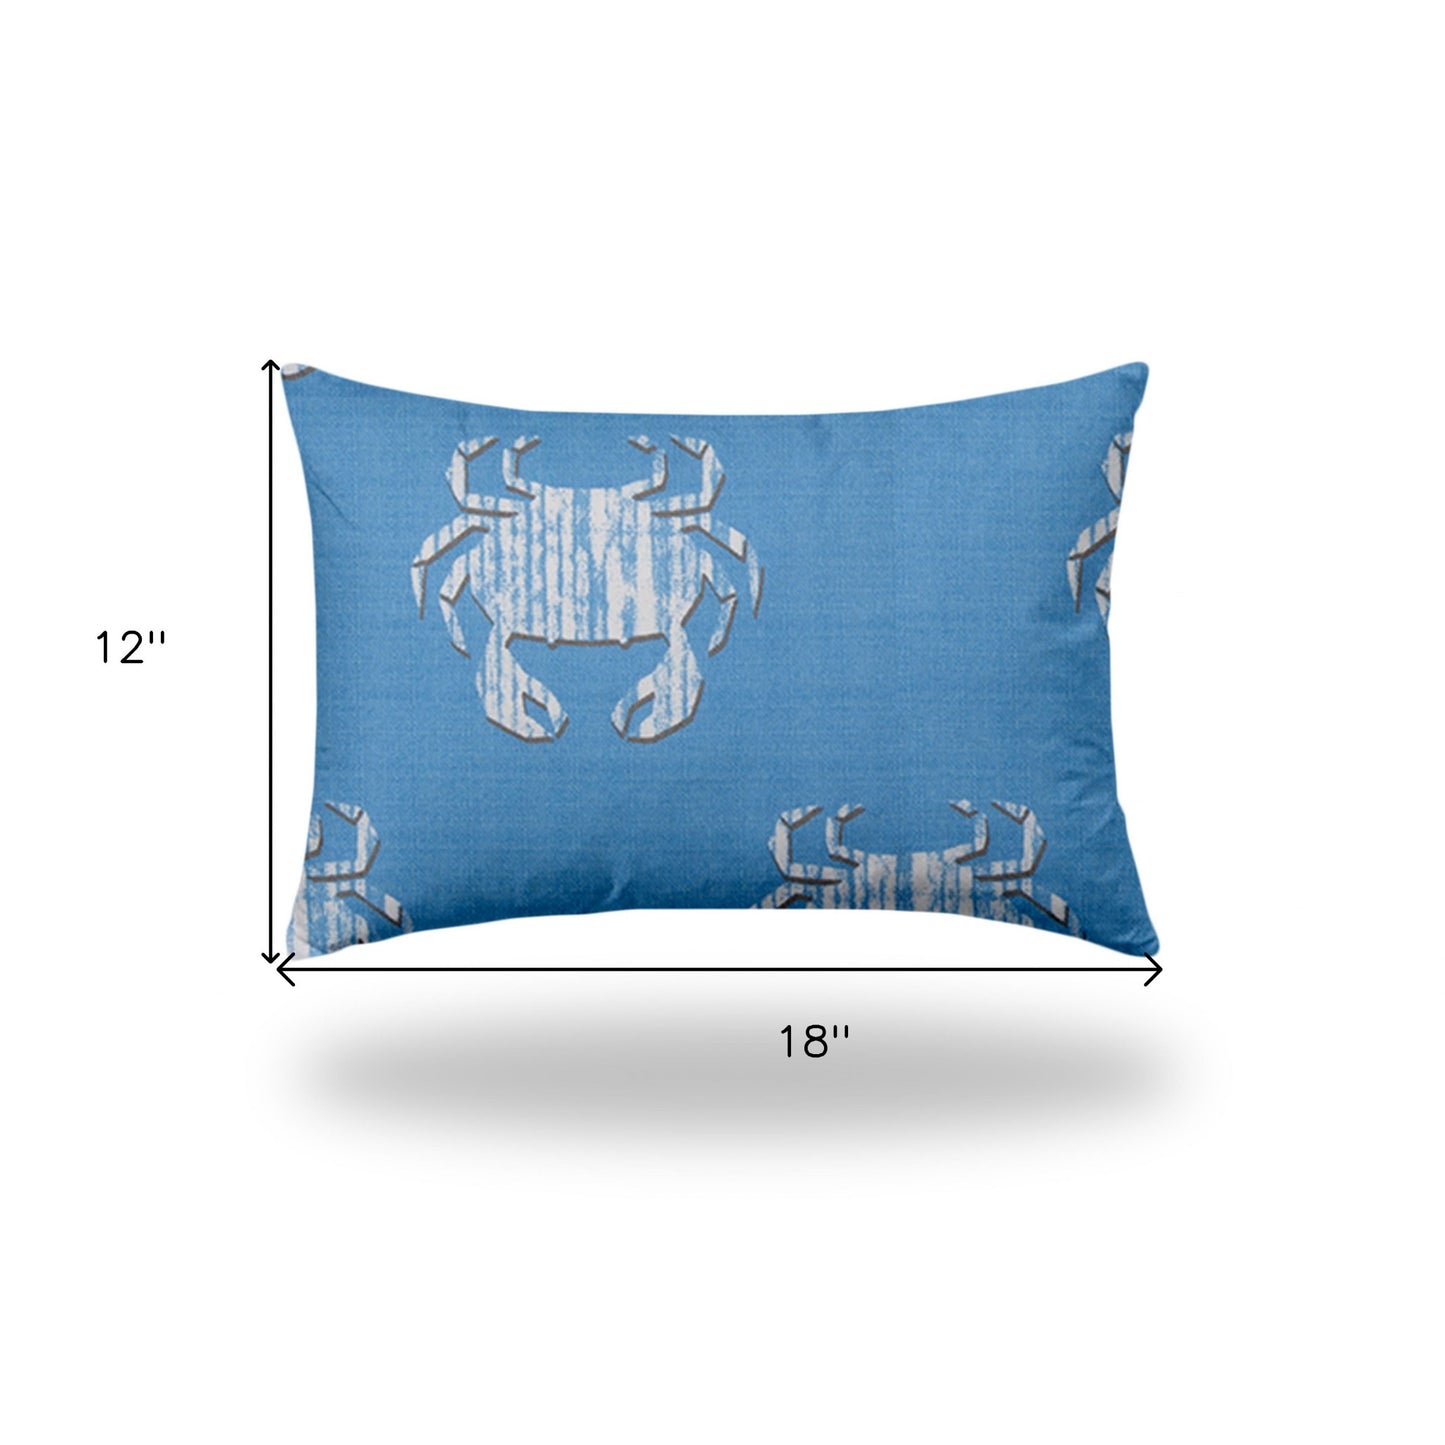 12" X 18" Blue And White Crab Enveloped Coastal Lumbar Indoor Outdoor Pillow